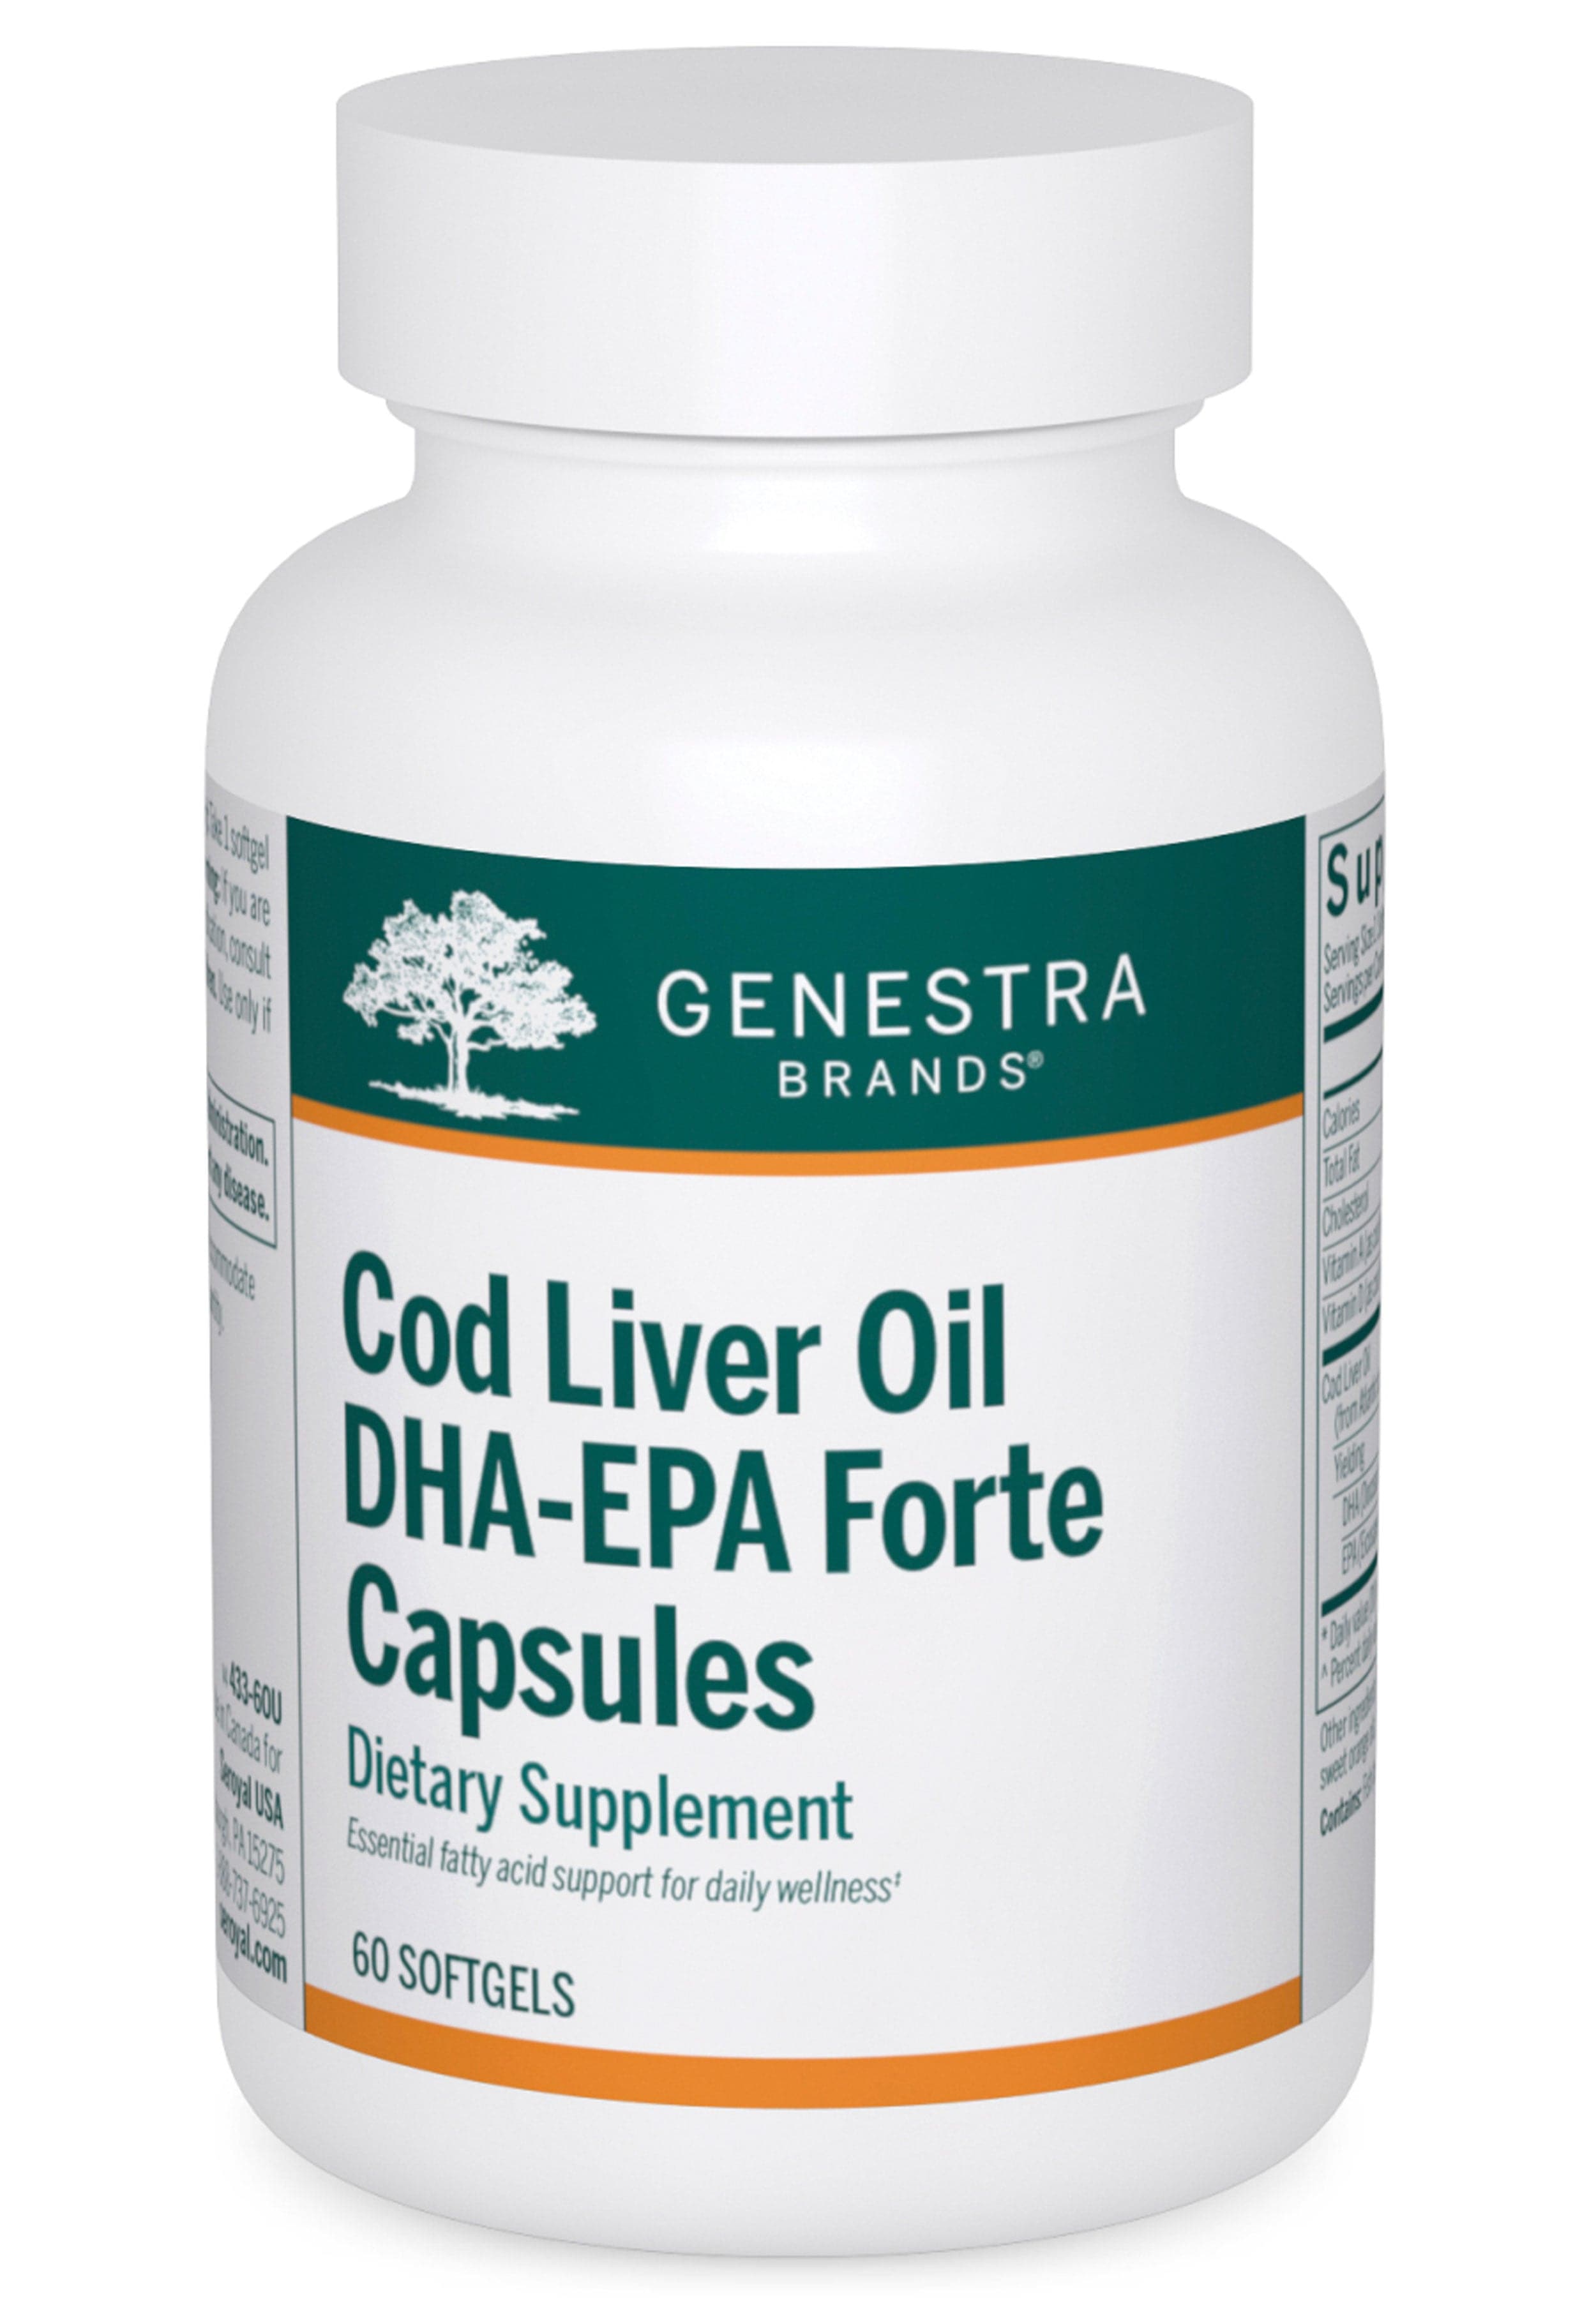 Genestra Brands Cod Liver Oil DHA-EPA Forte Capsules